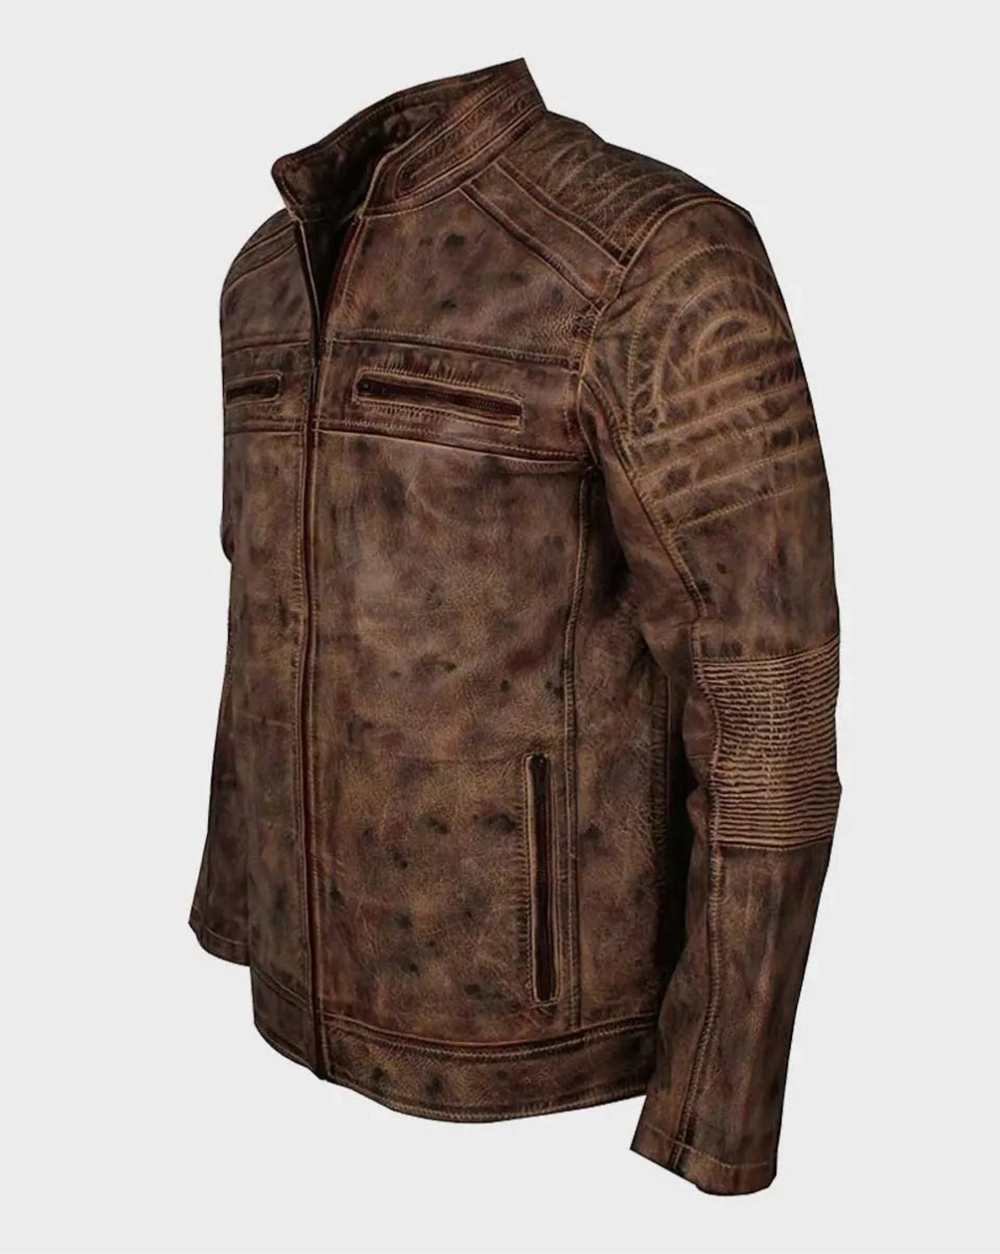 Buy Mens Vintage Leather Jacket